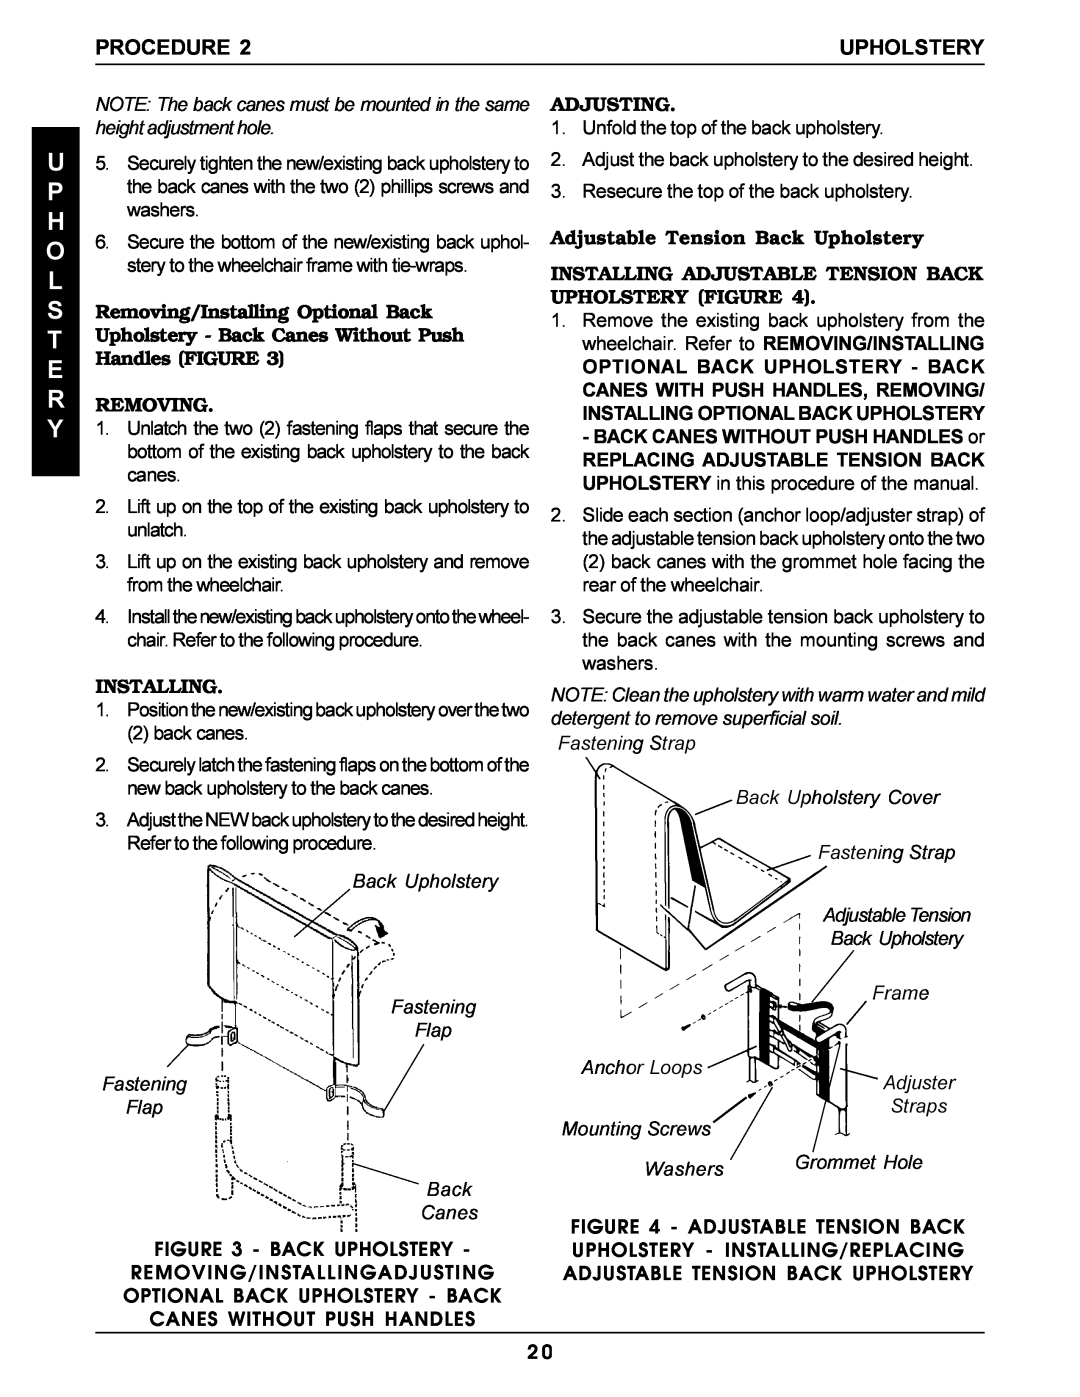 Invacare Pro Series manual Removing/Installing Optional Back, Adjusting, Adjustable Tension Back Upholstery, Procedure 